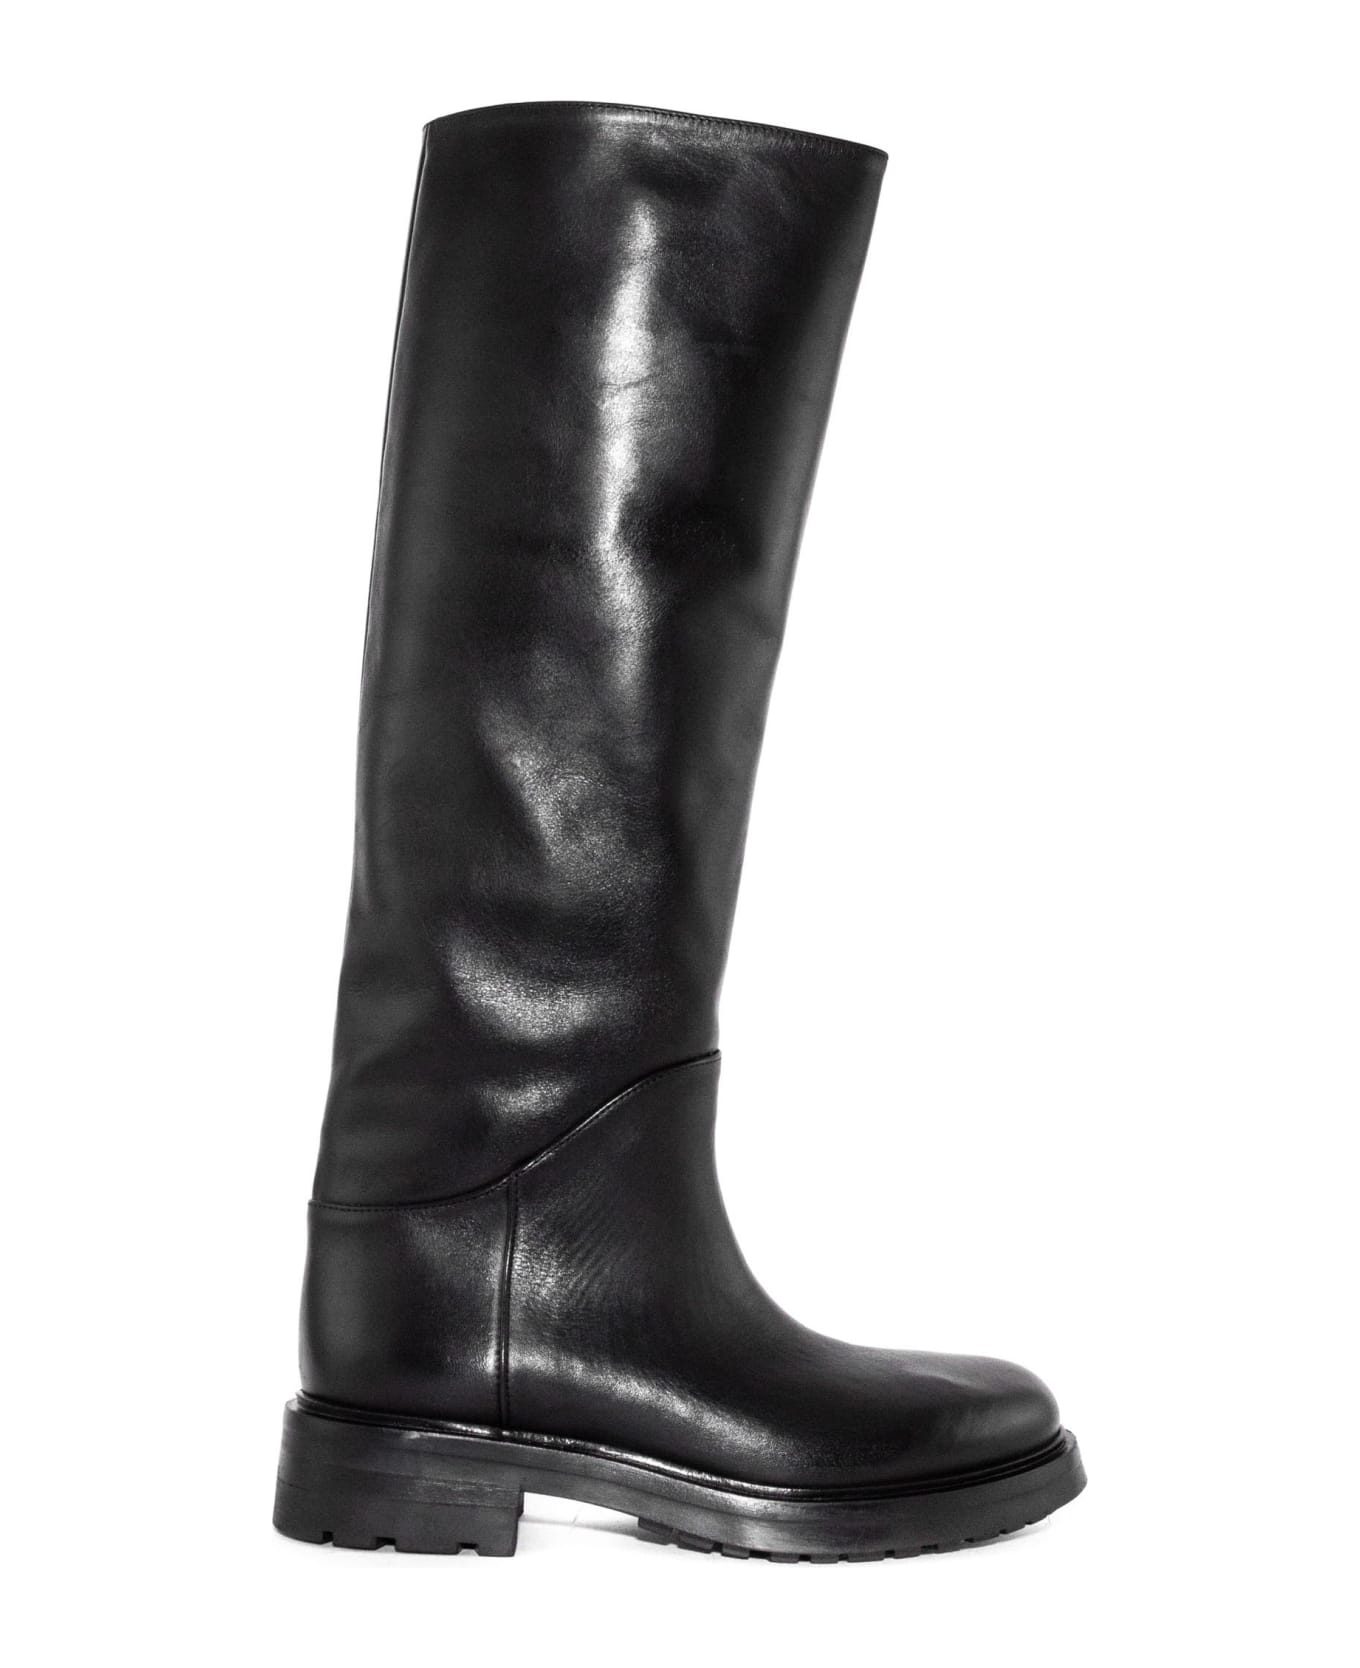 Elena Iachi Black Leather High Boots - Black ブーツ